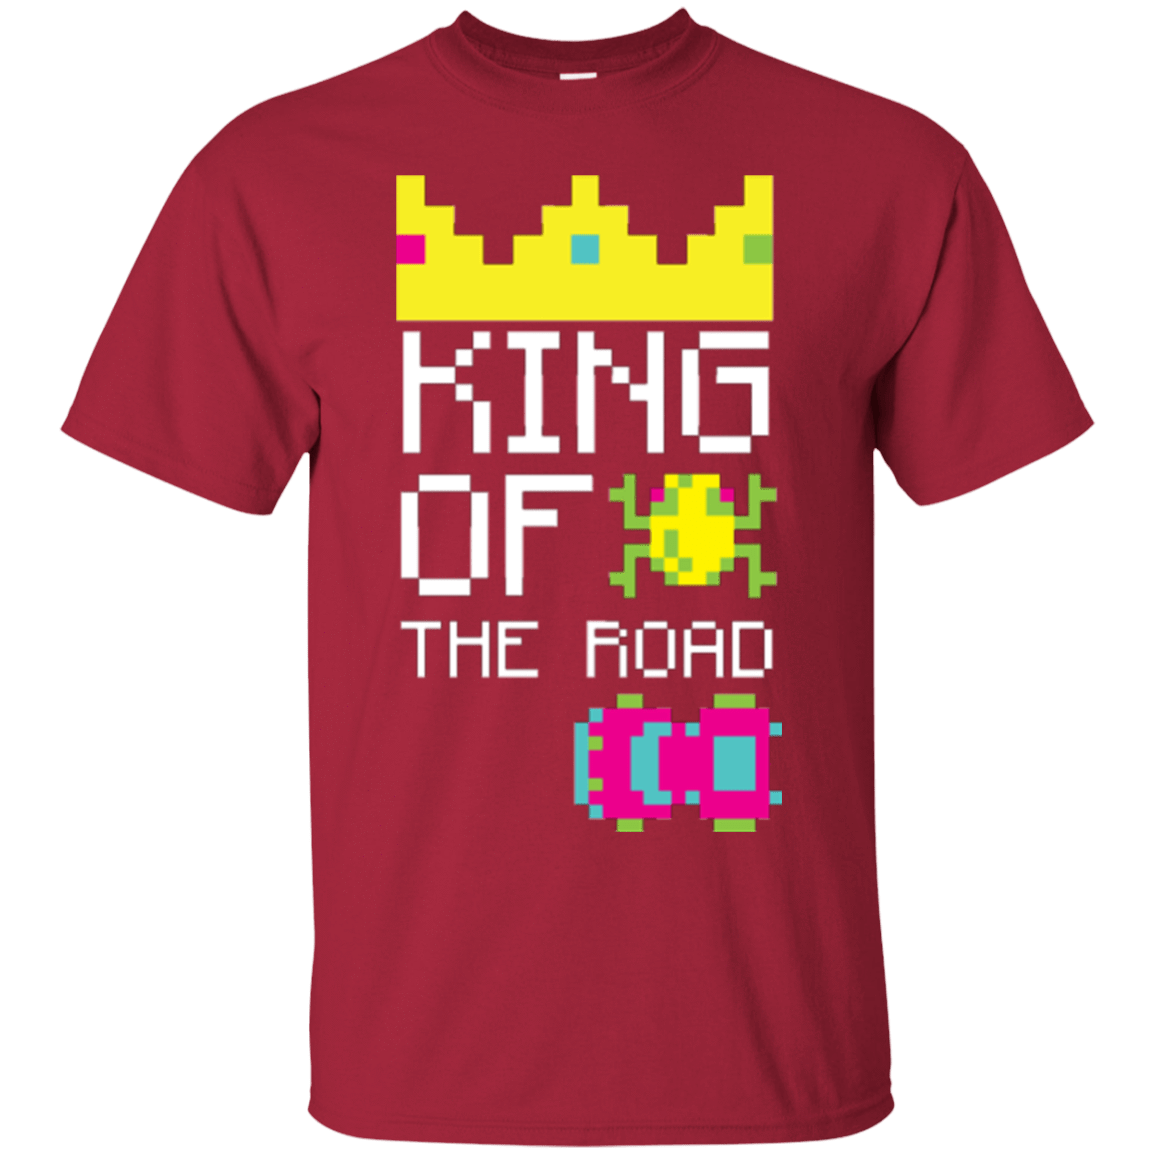 T-Shirts Cardinal / Small King Of The Road T-Shirt